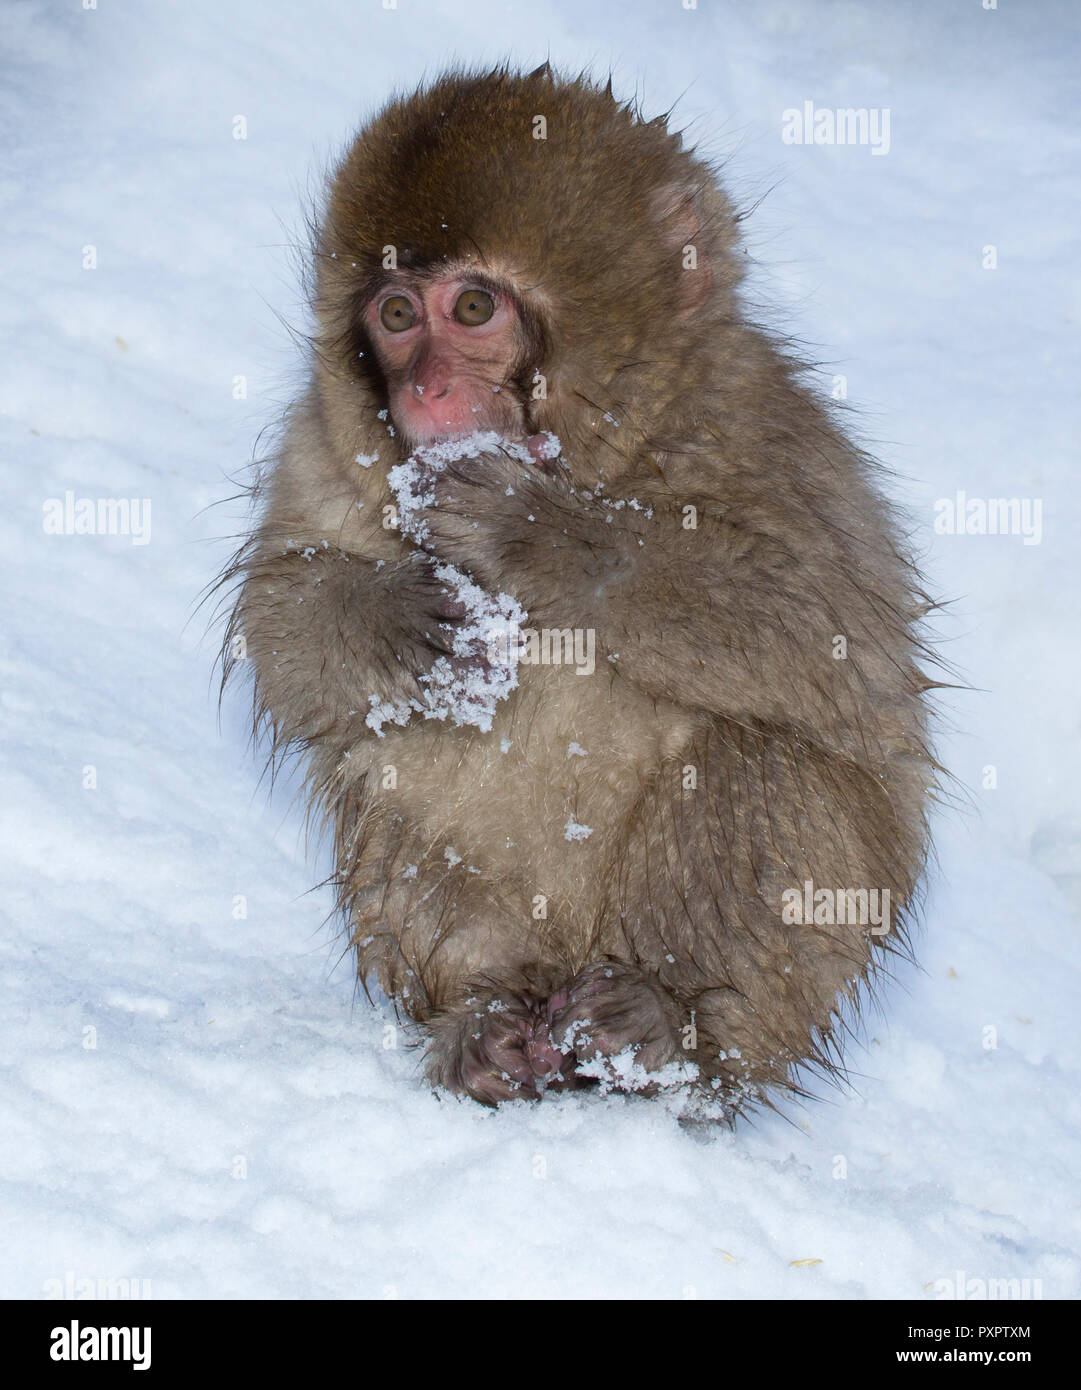 Makake, snow monkey, sitting in the snow, eating snow, Japan Stock Photo